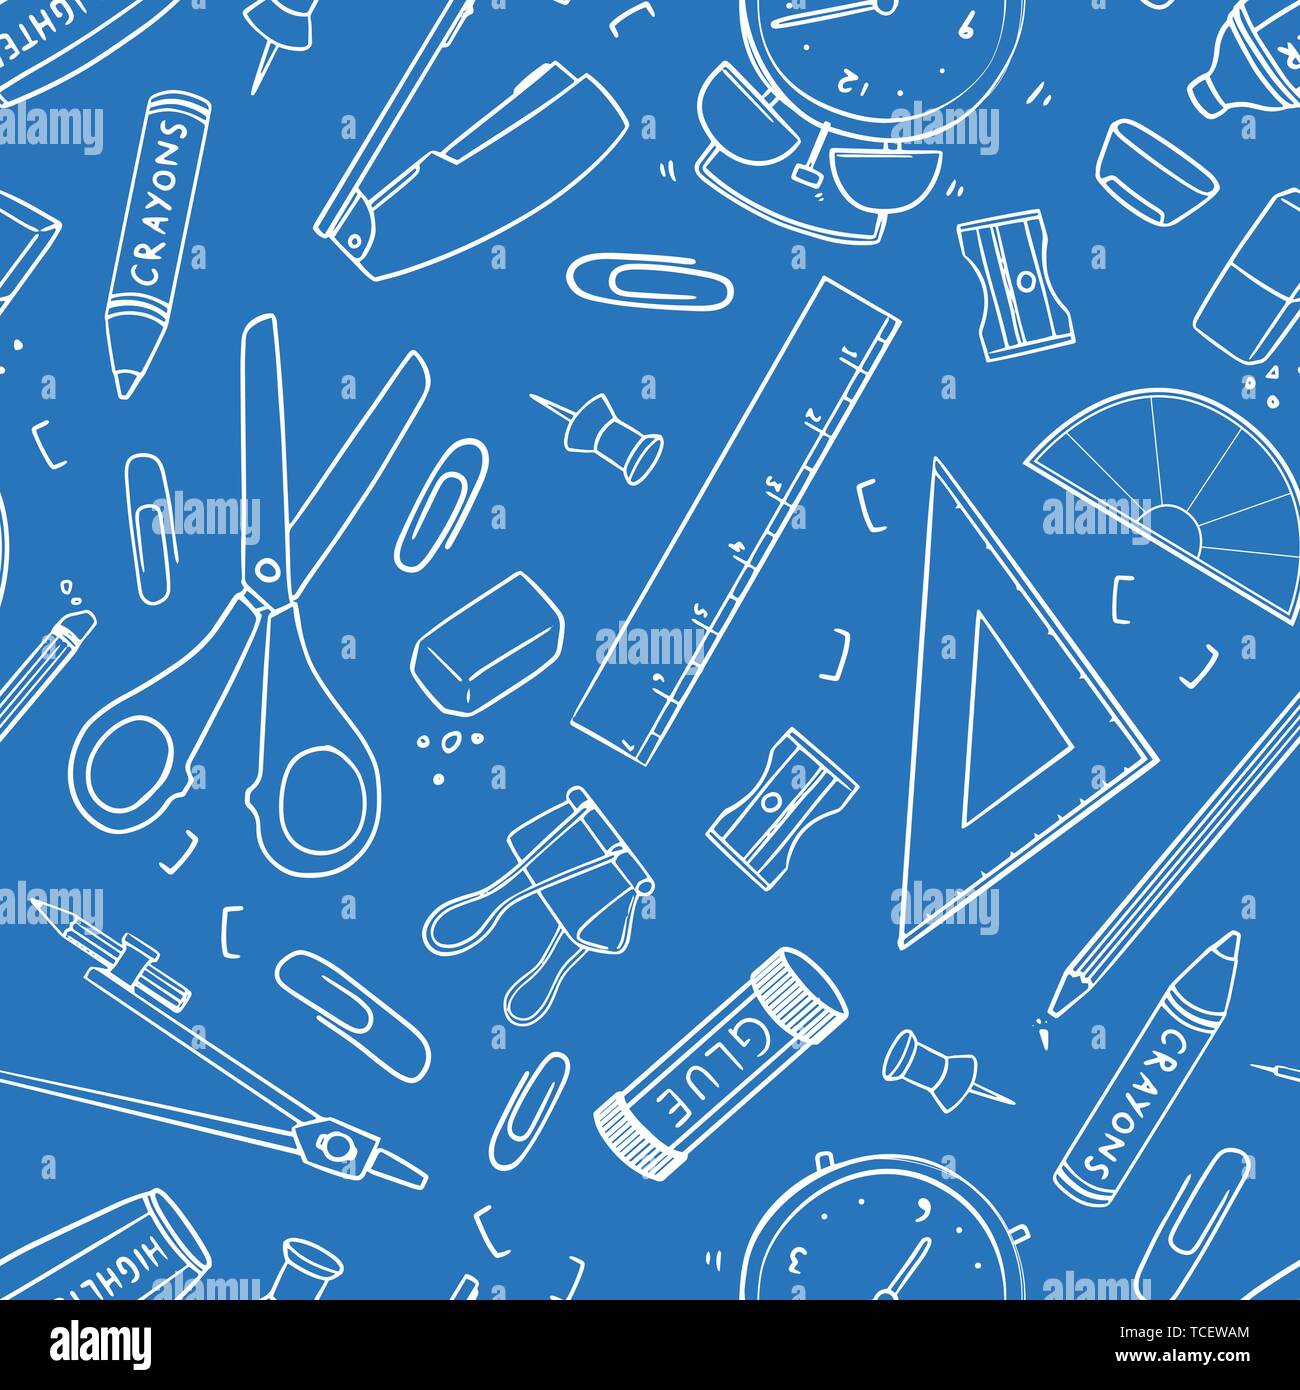 Blueprint of Stationary tool pattern. Seamless vector design; Hand drawn outline of eraser, triangular ruler, scissor, sharpener, pencil, glue stick, Stock Vector